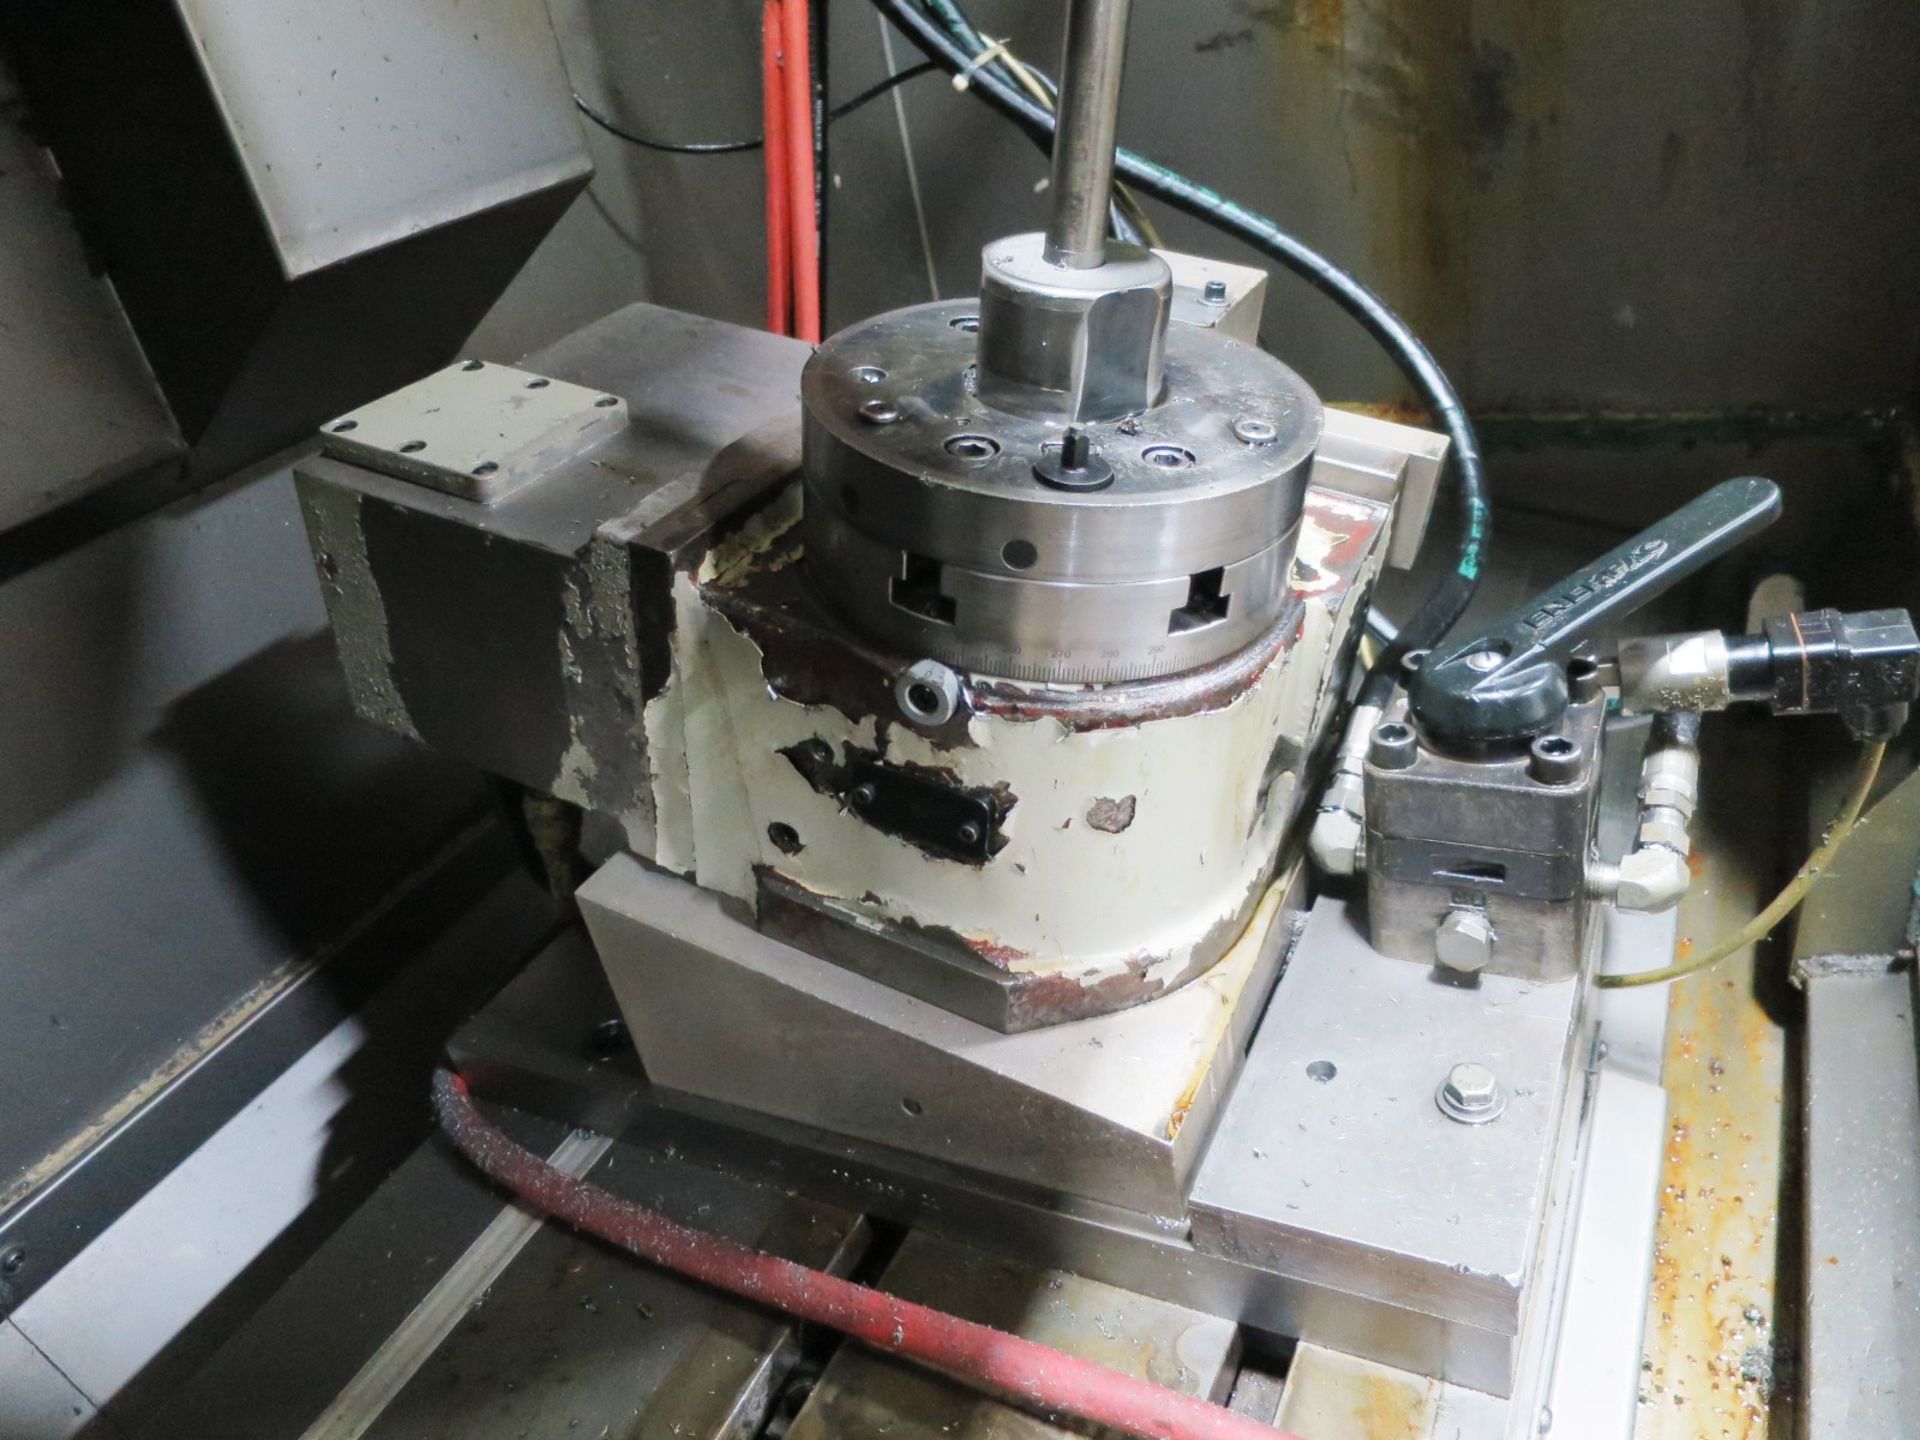 Okuma MX-45 4-Axis CNC Vertical Machining Center, S/N 0376 - Image 6 of 14